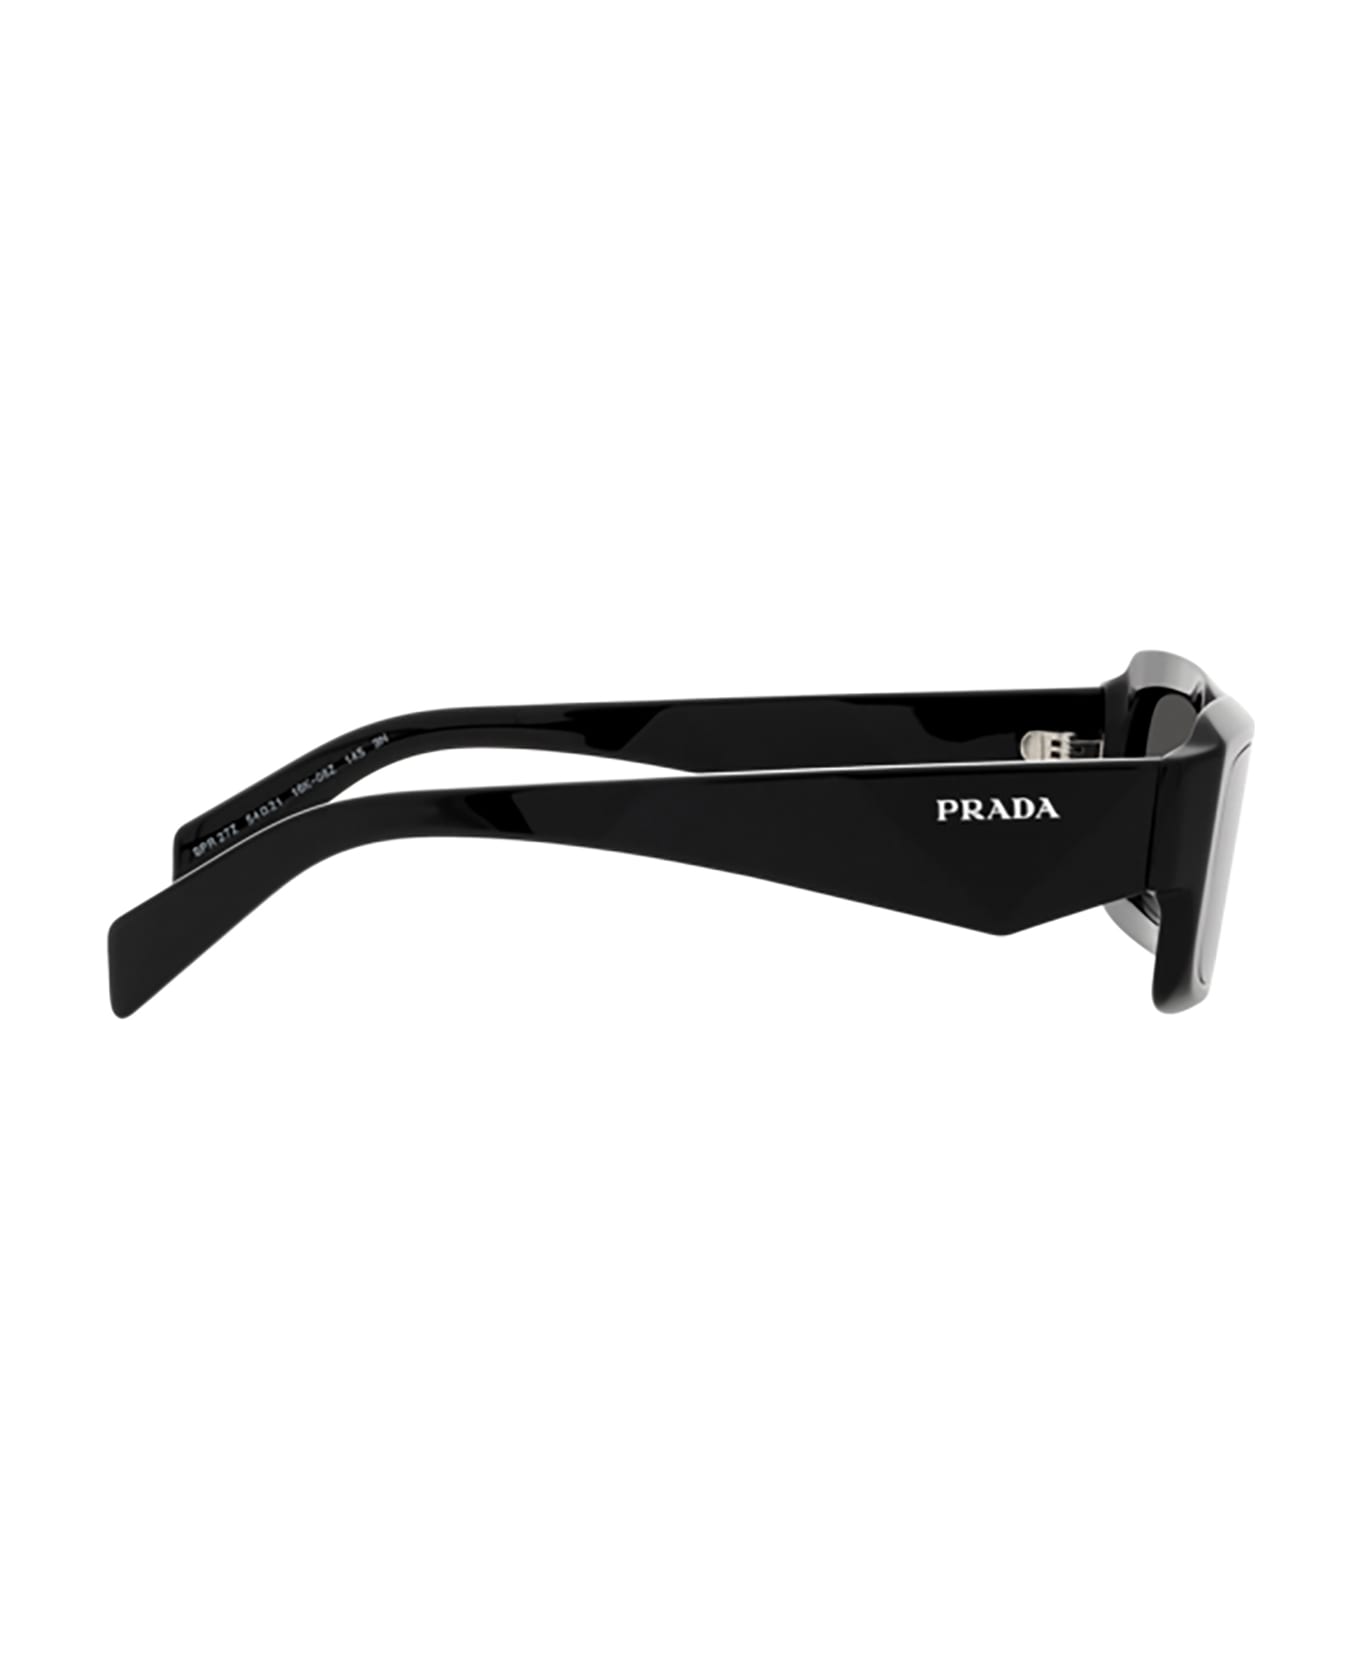 Prada Eyewear Pr 27zs Black Sunglasses - Black